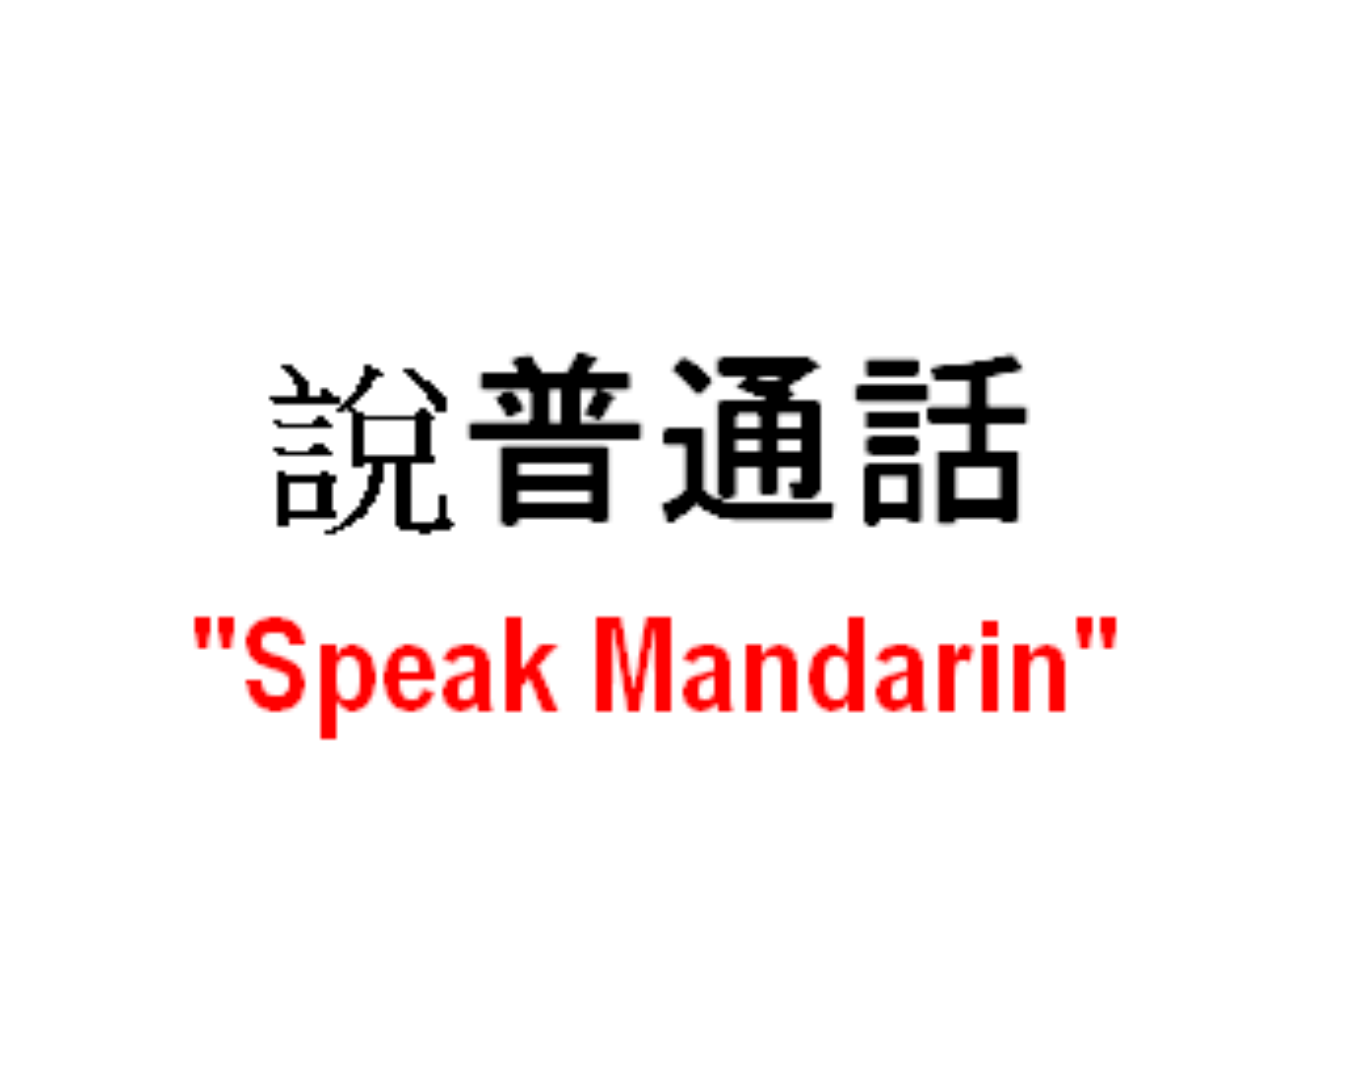 "Speak Mandarin" campaigns.